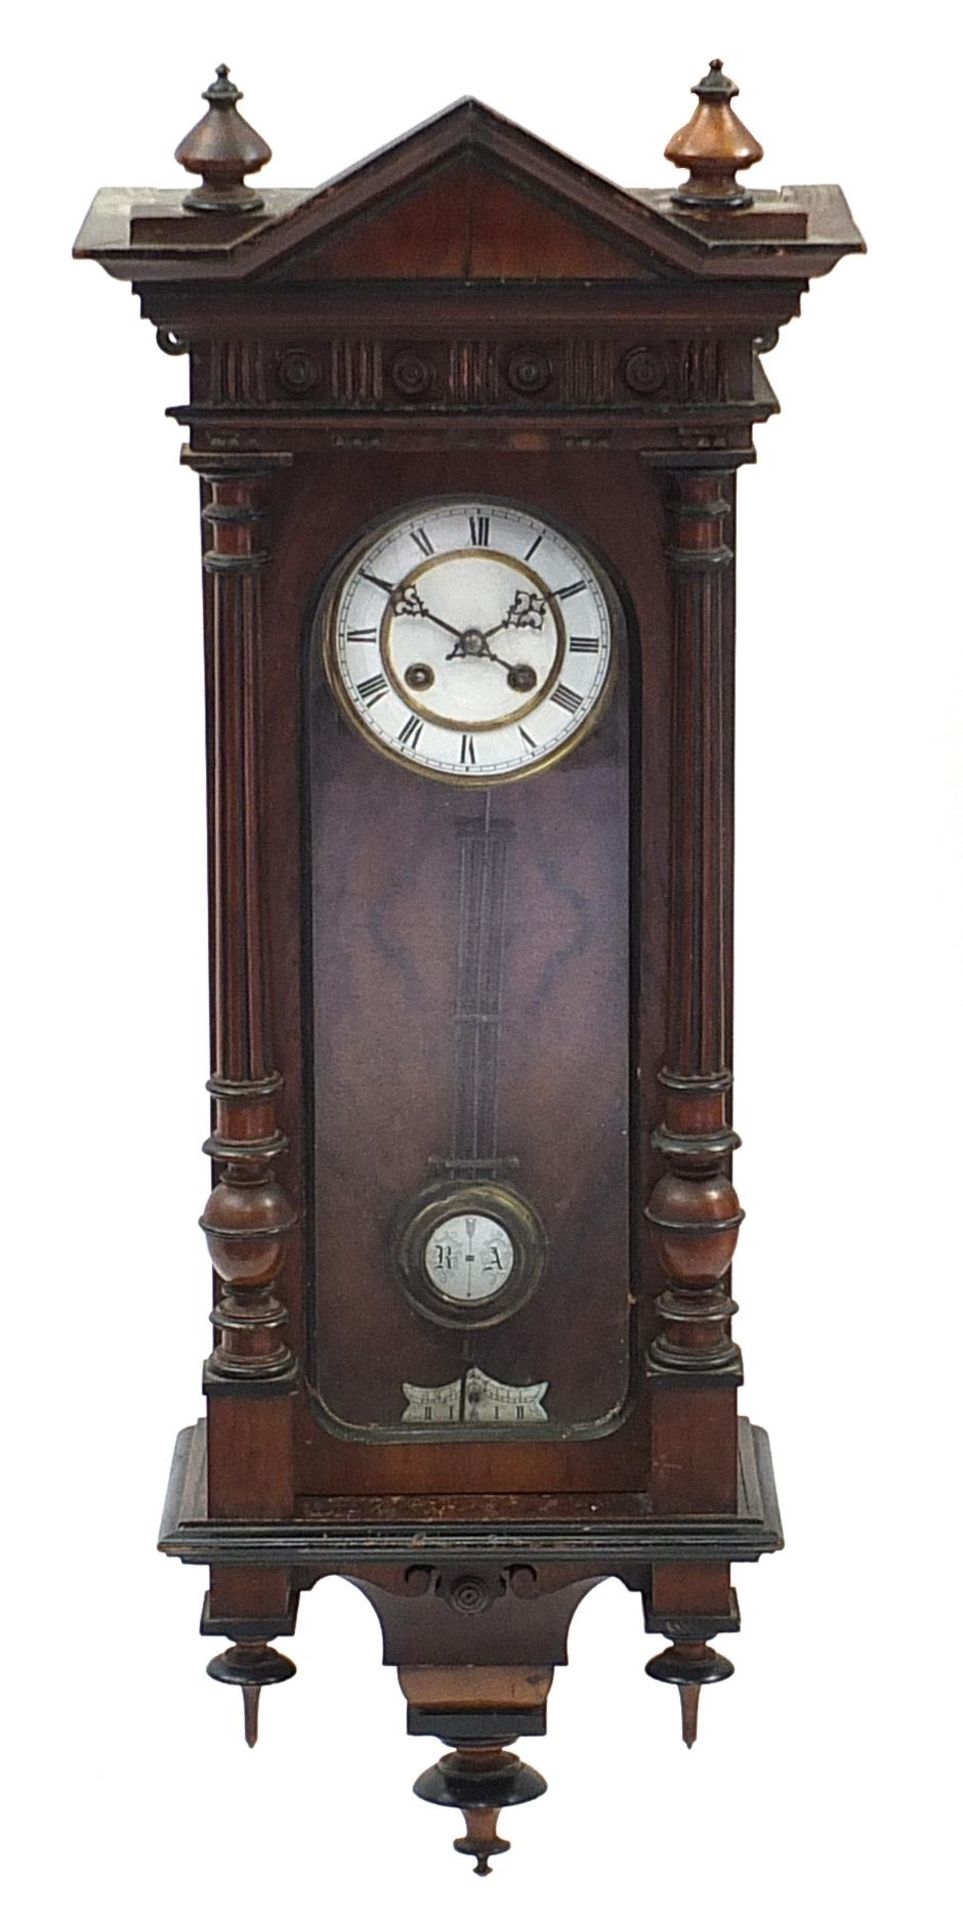 Mahogany Vienna Regulator striking wall clock with enamelled dial, 92cm high